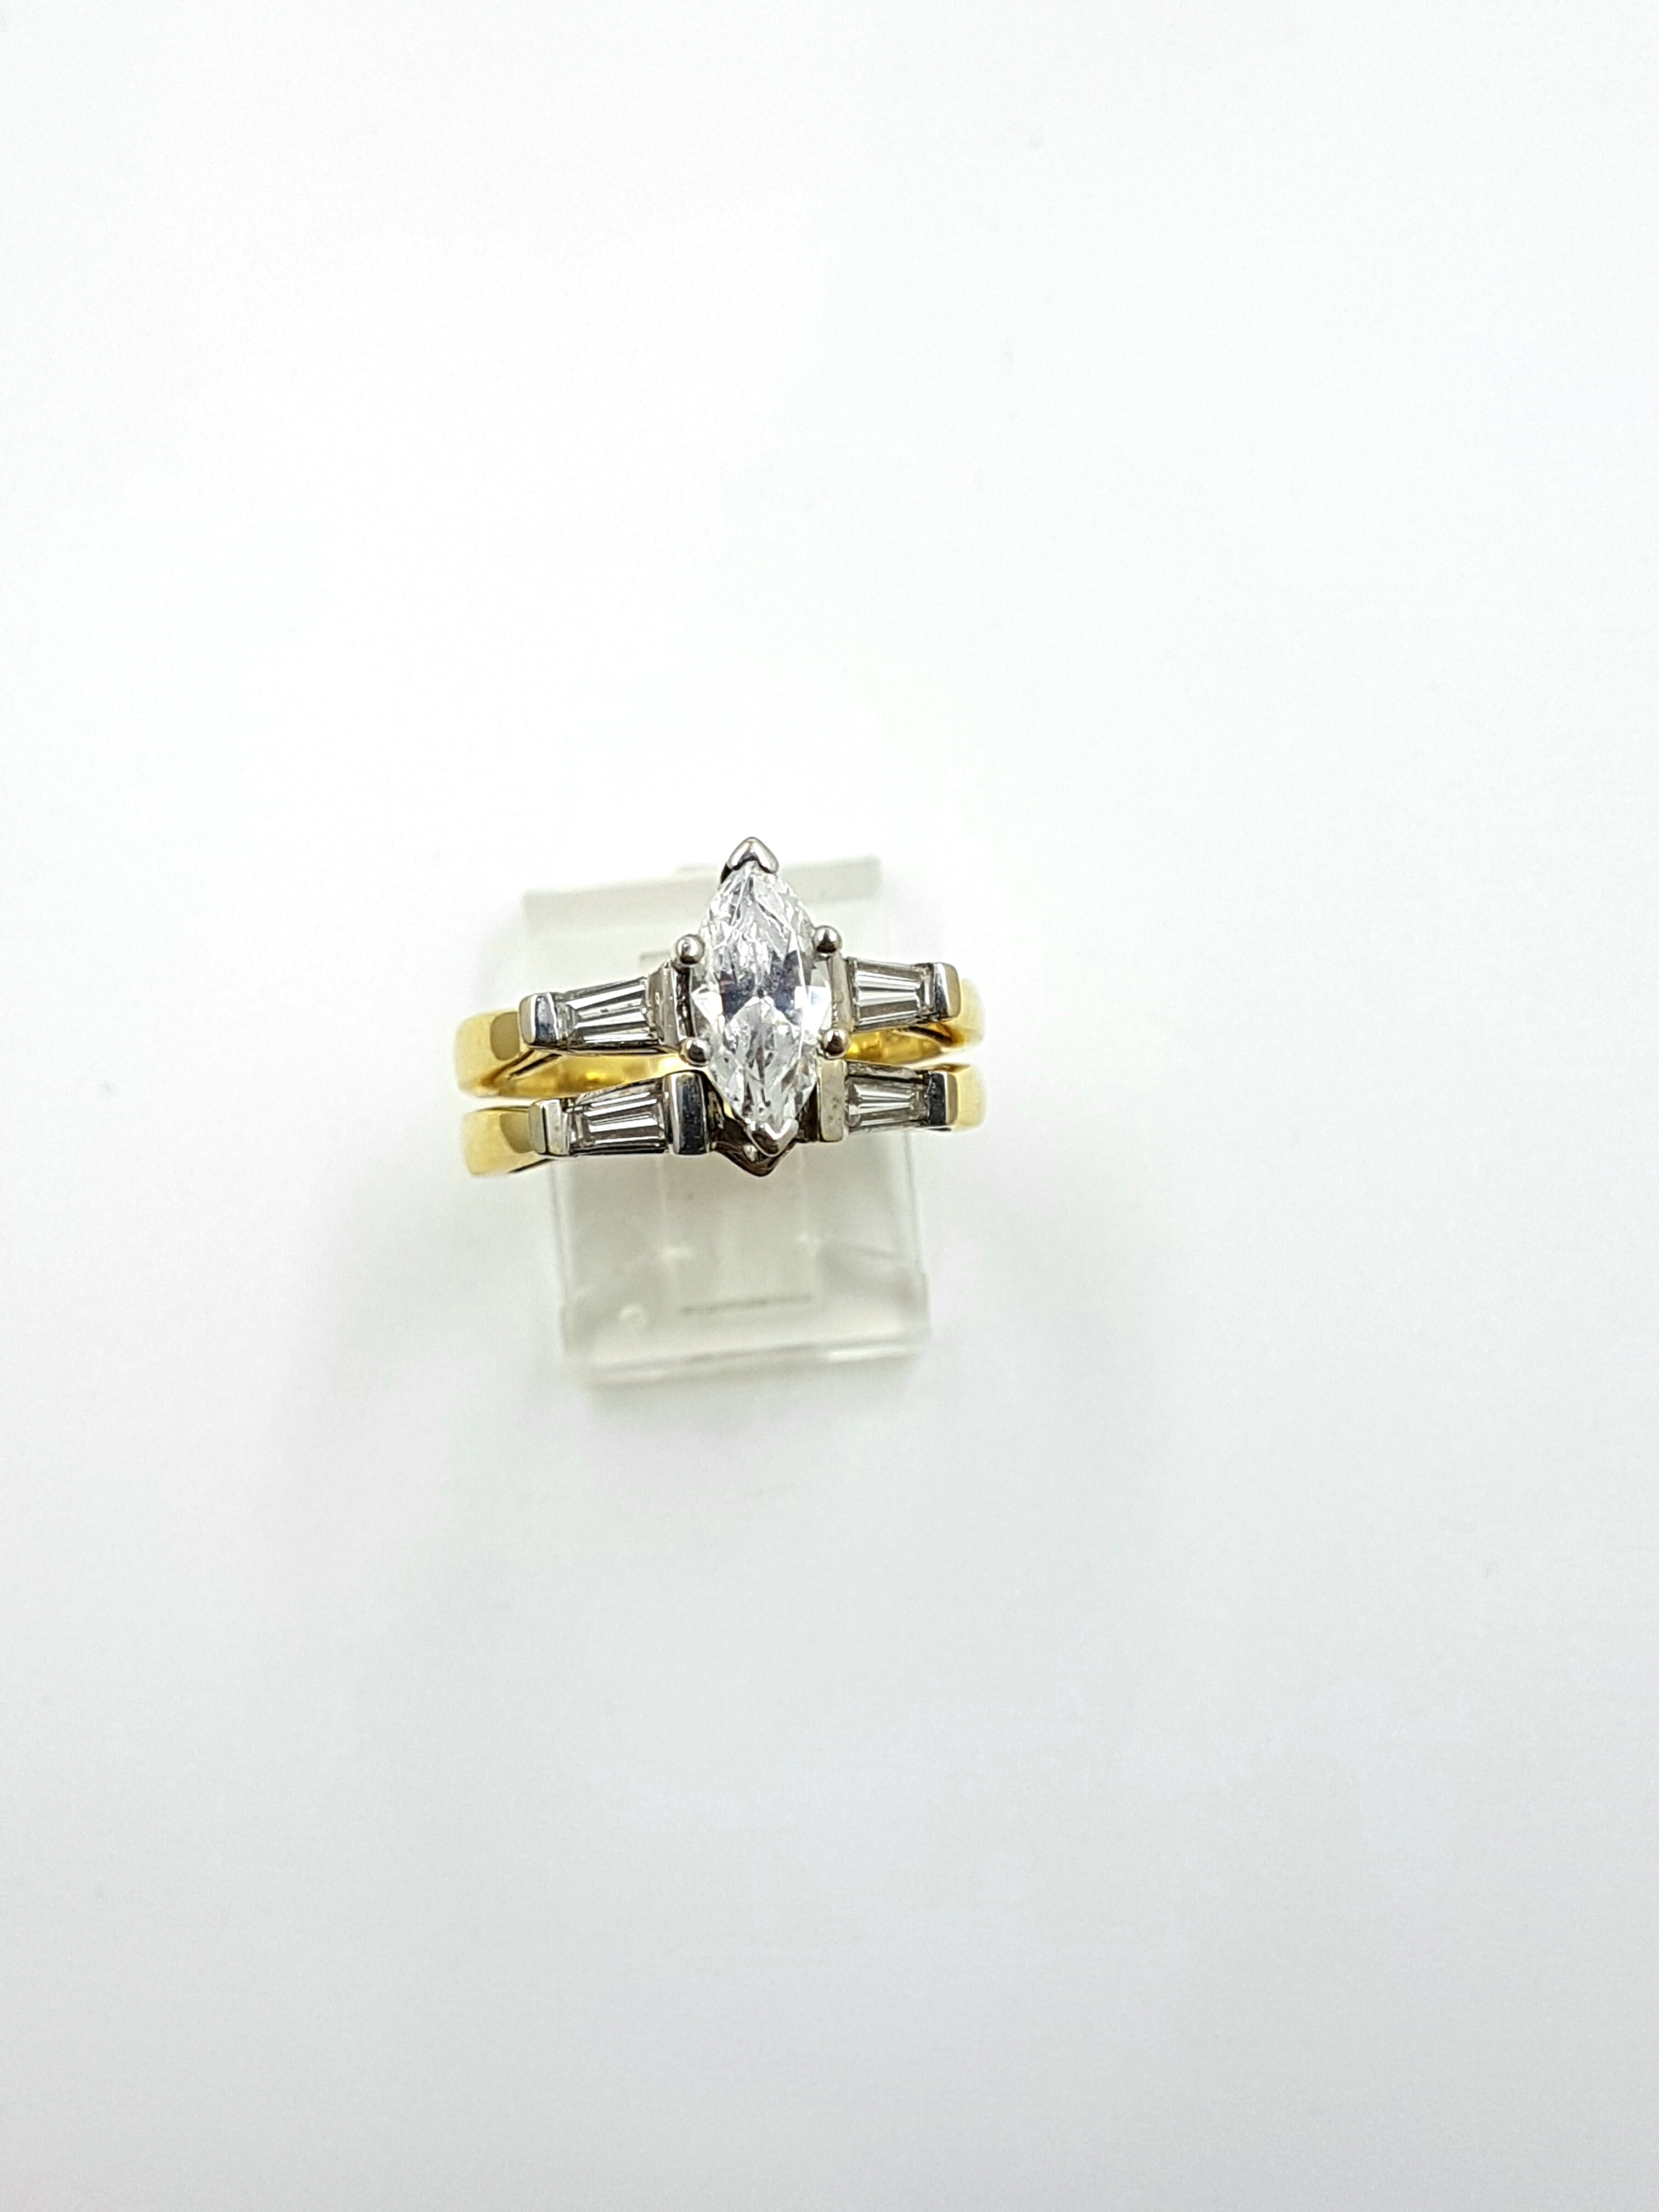 Engagement Ring & Wedding Band
Center: Cubic Zirconia / Sides: 0.55ct
Regular Price $4500
SALE $1300
Ref: CM316